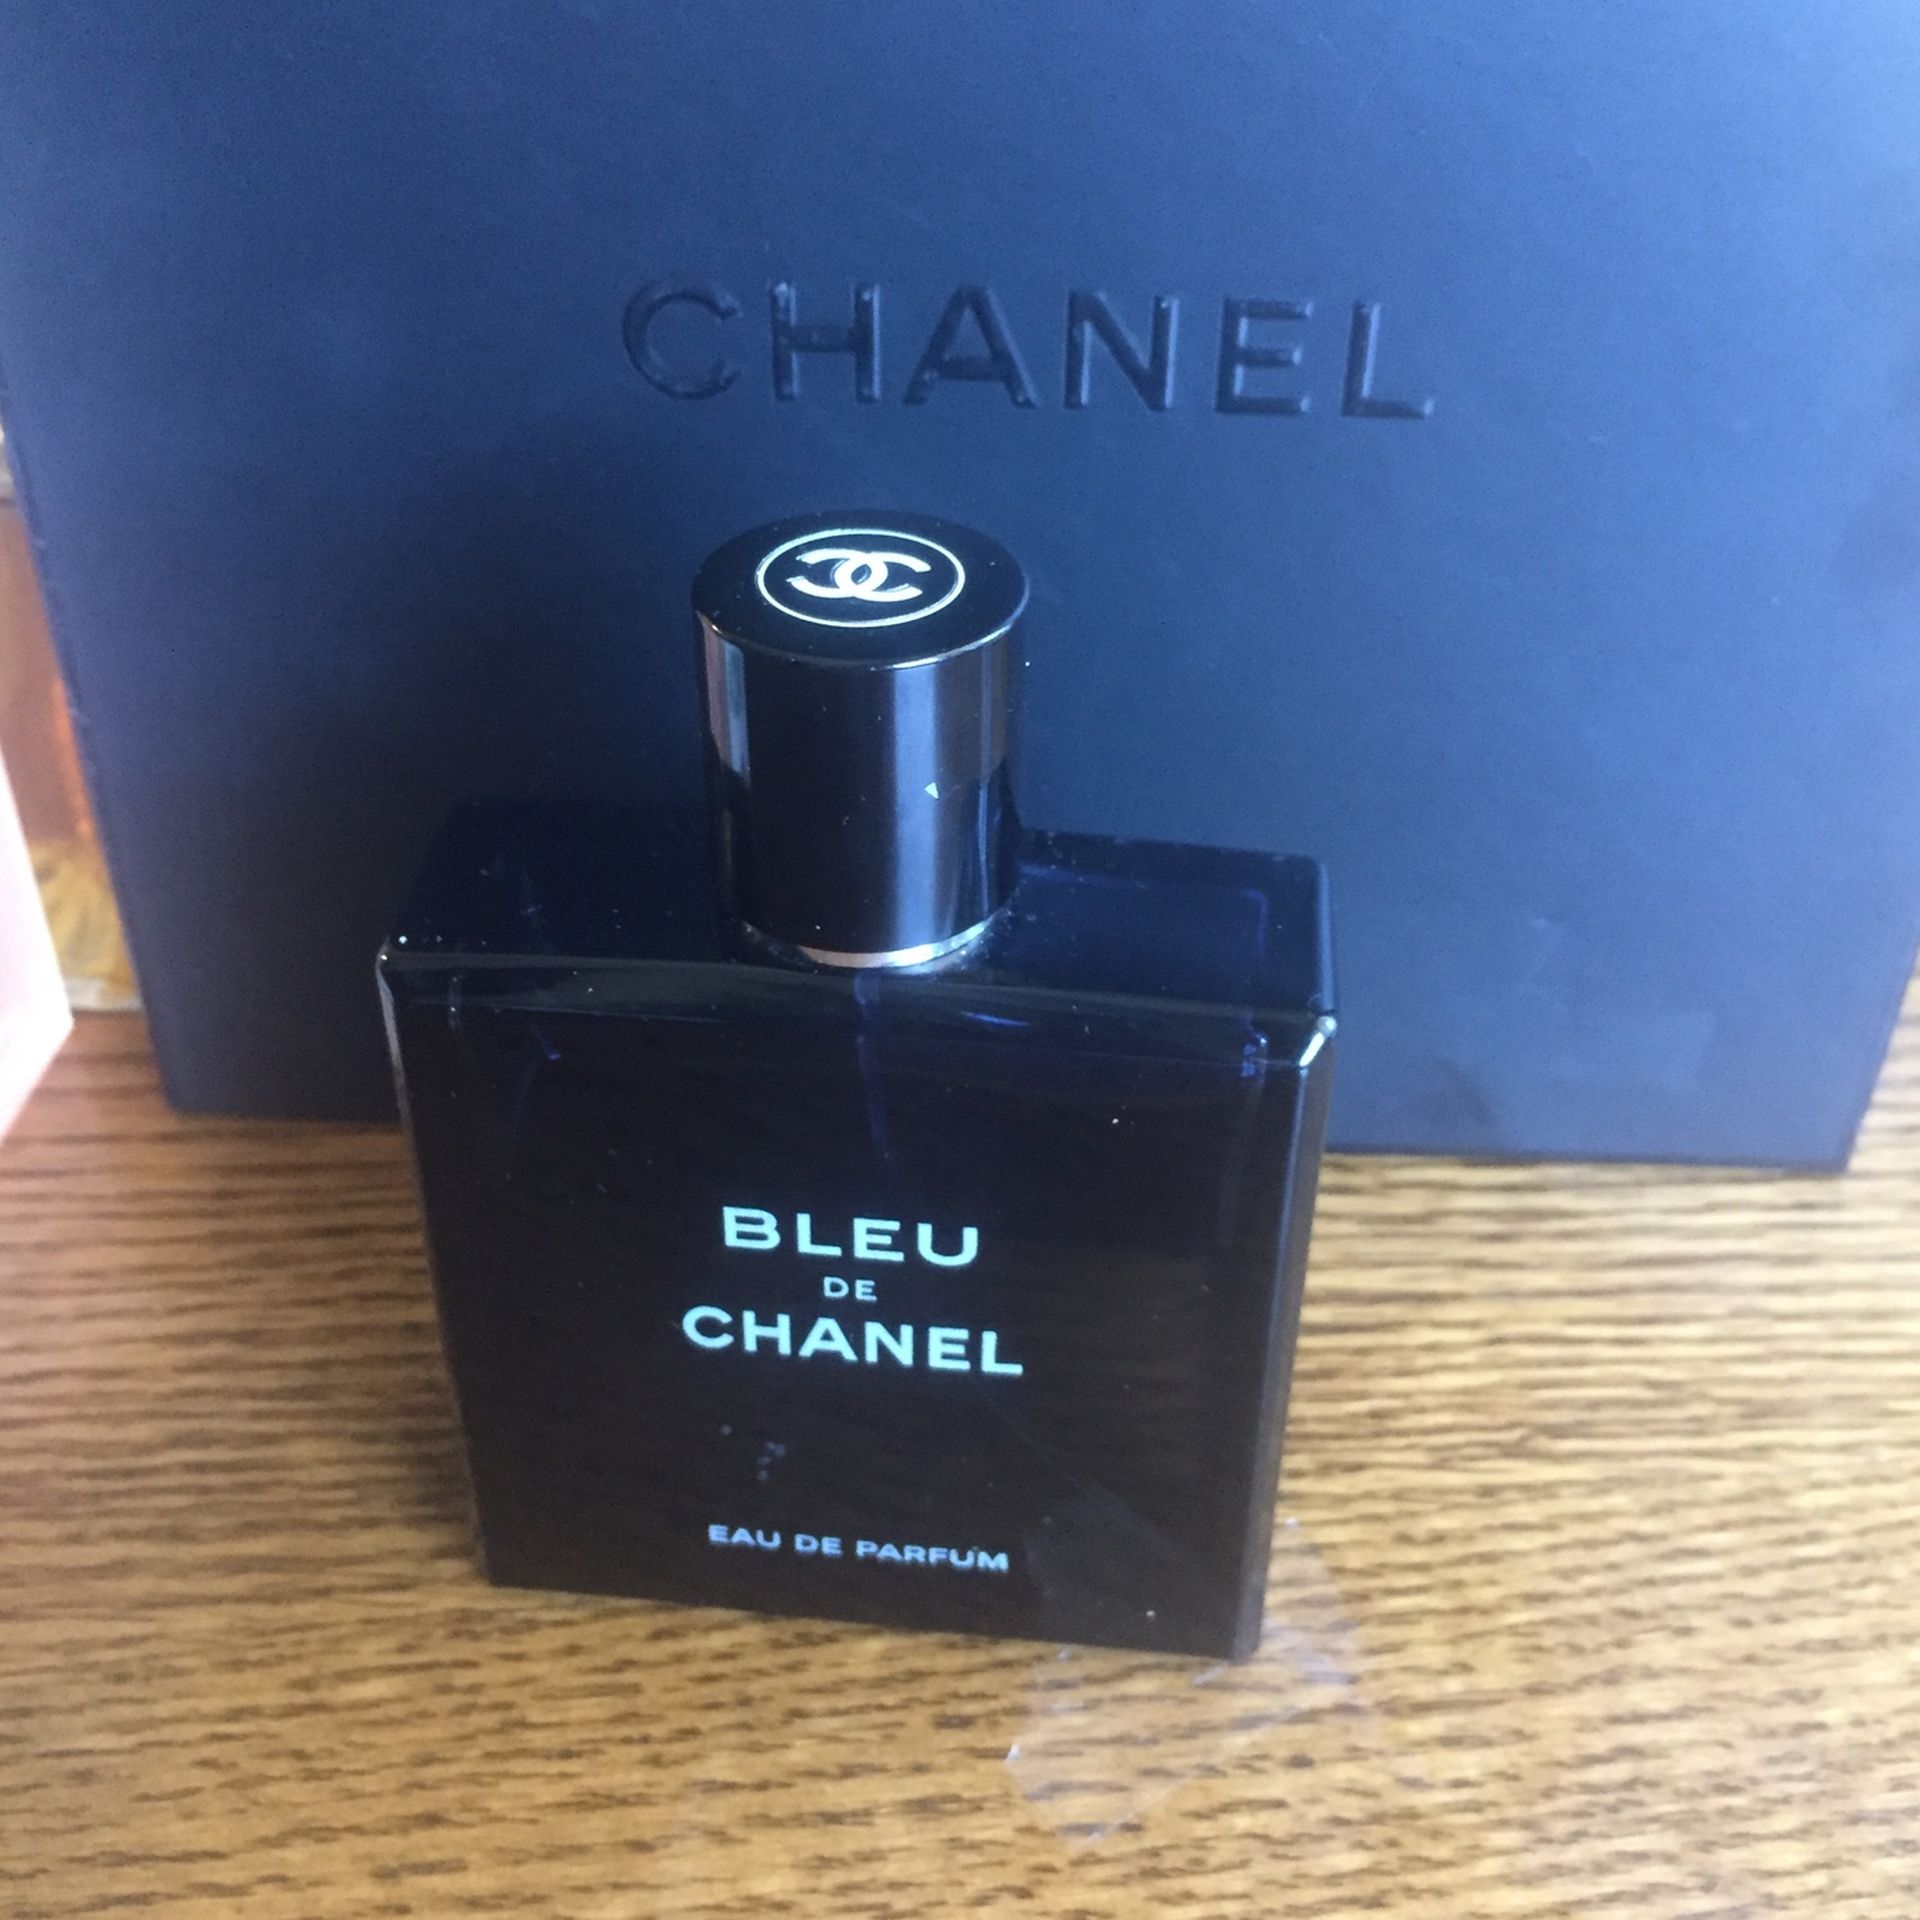 BLEU De CHANEL Original Used 70% Perfume for Sale in